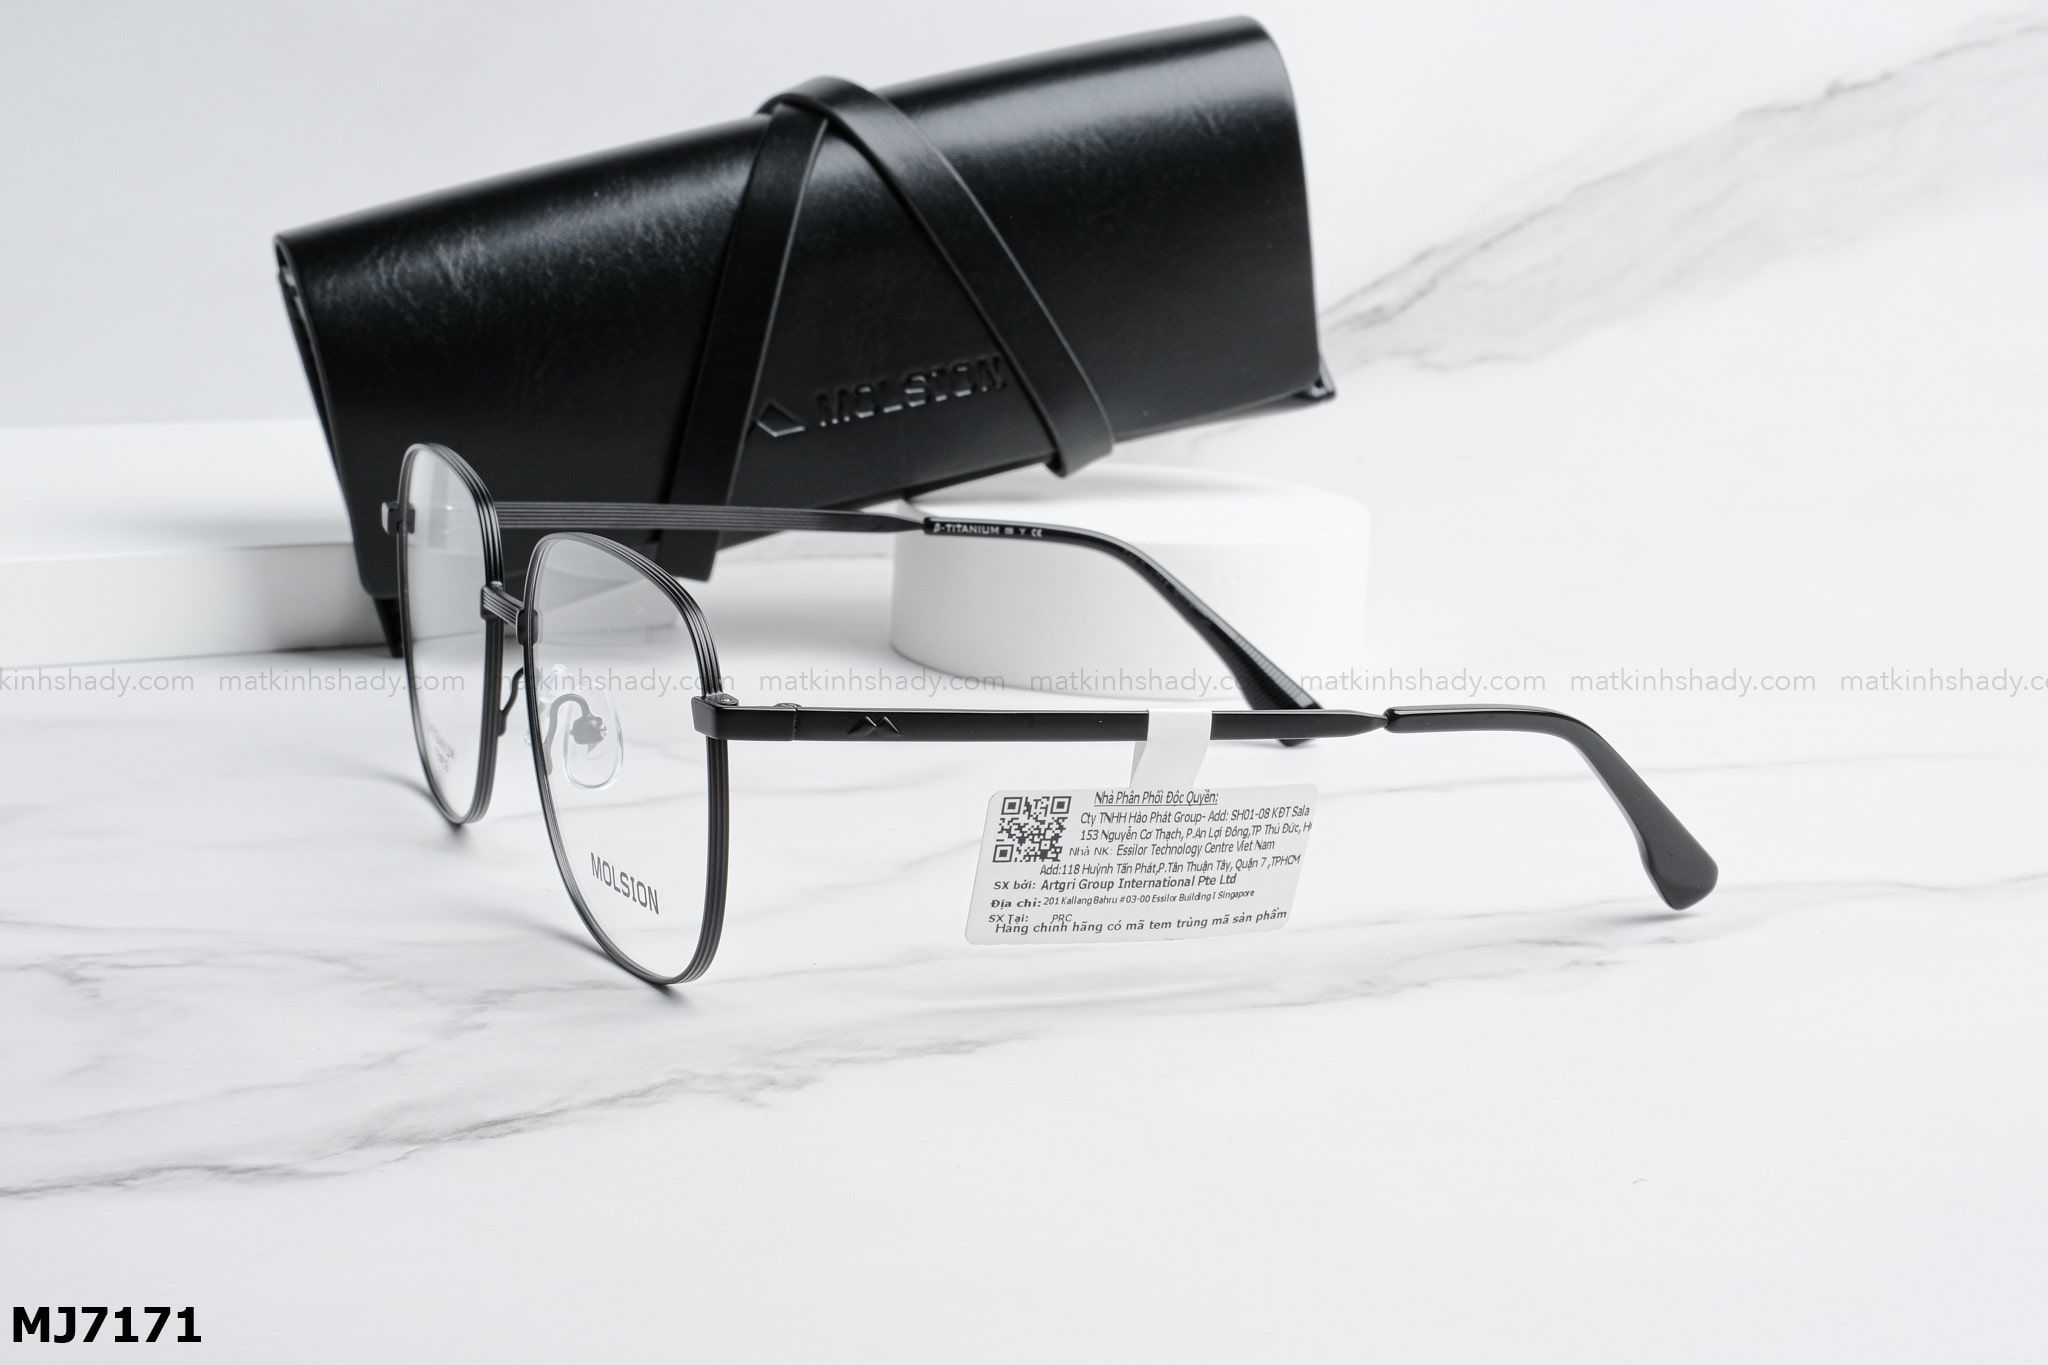  Molsion Eyewear - Glasses - MJ7171 